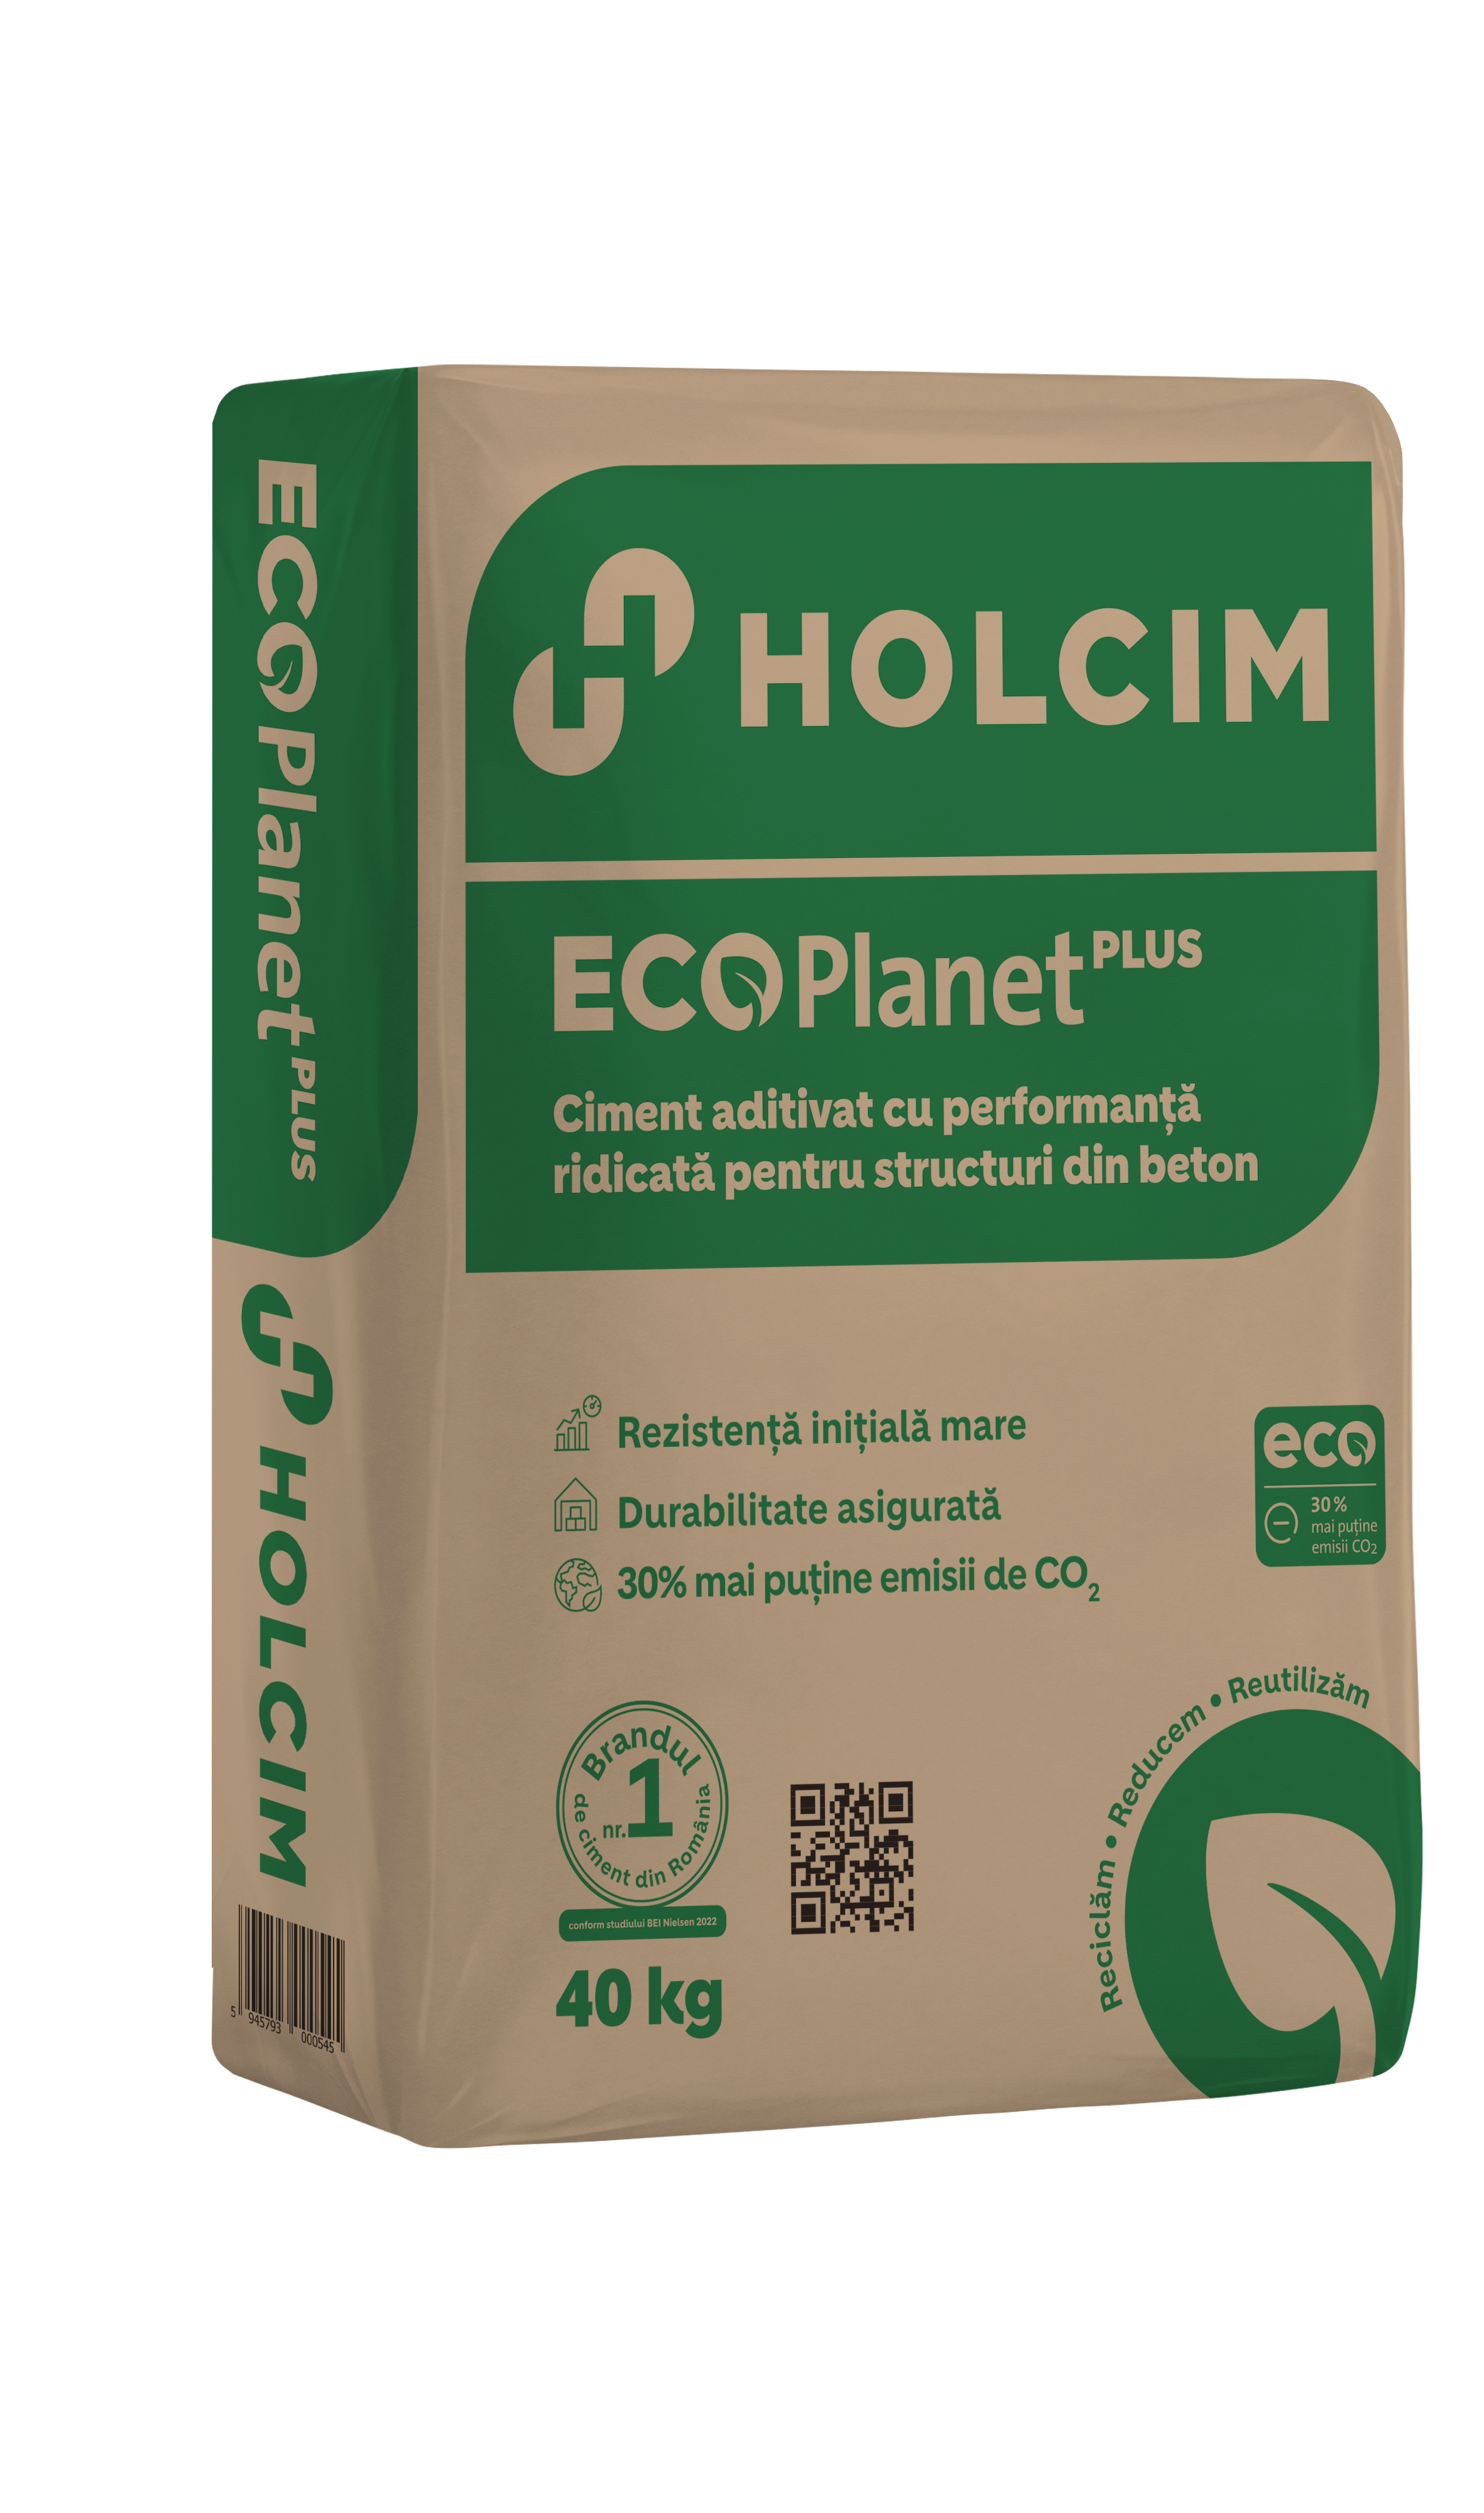 Mortare - Ciment Portland HOLCIM 40KG EcoPlanet, https:magazin.crisgroup.ro